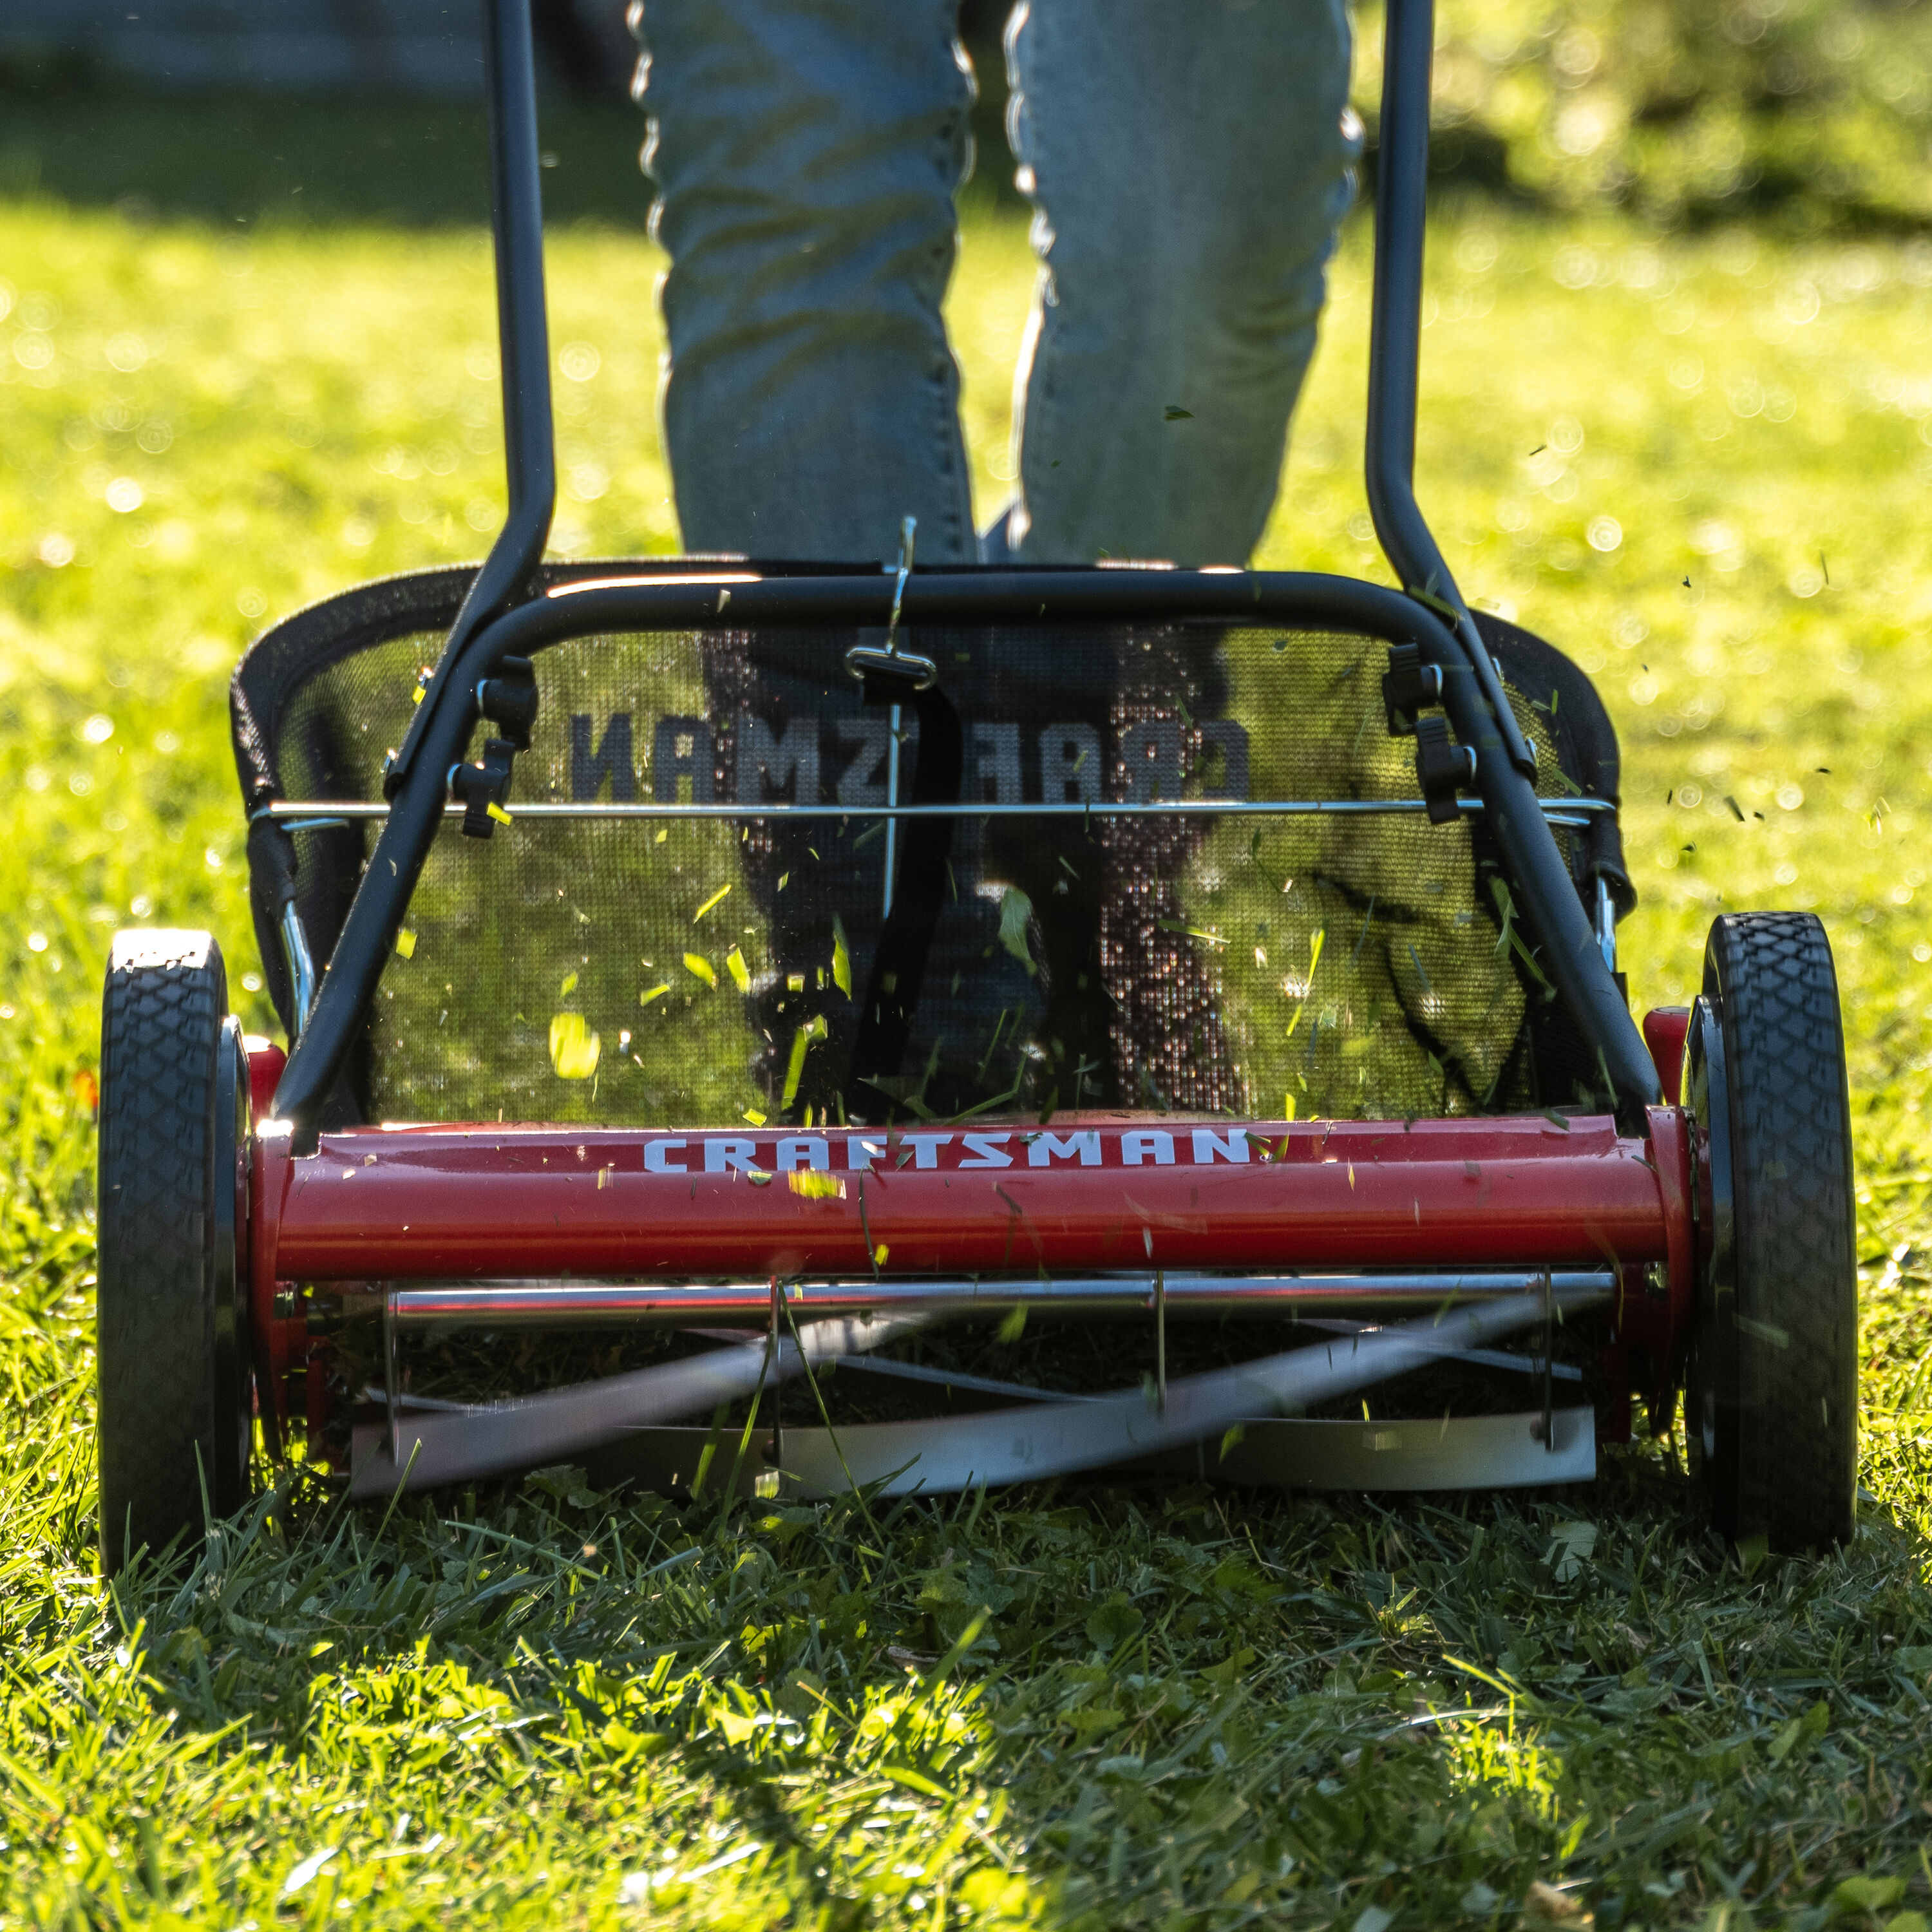 Craftsman 1816-18CR 18-Inch 5-Blade Push Reel Lawn Mower with Grass  Catcher, Red : Patio, Lawn & Garden 